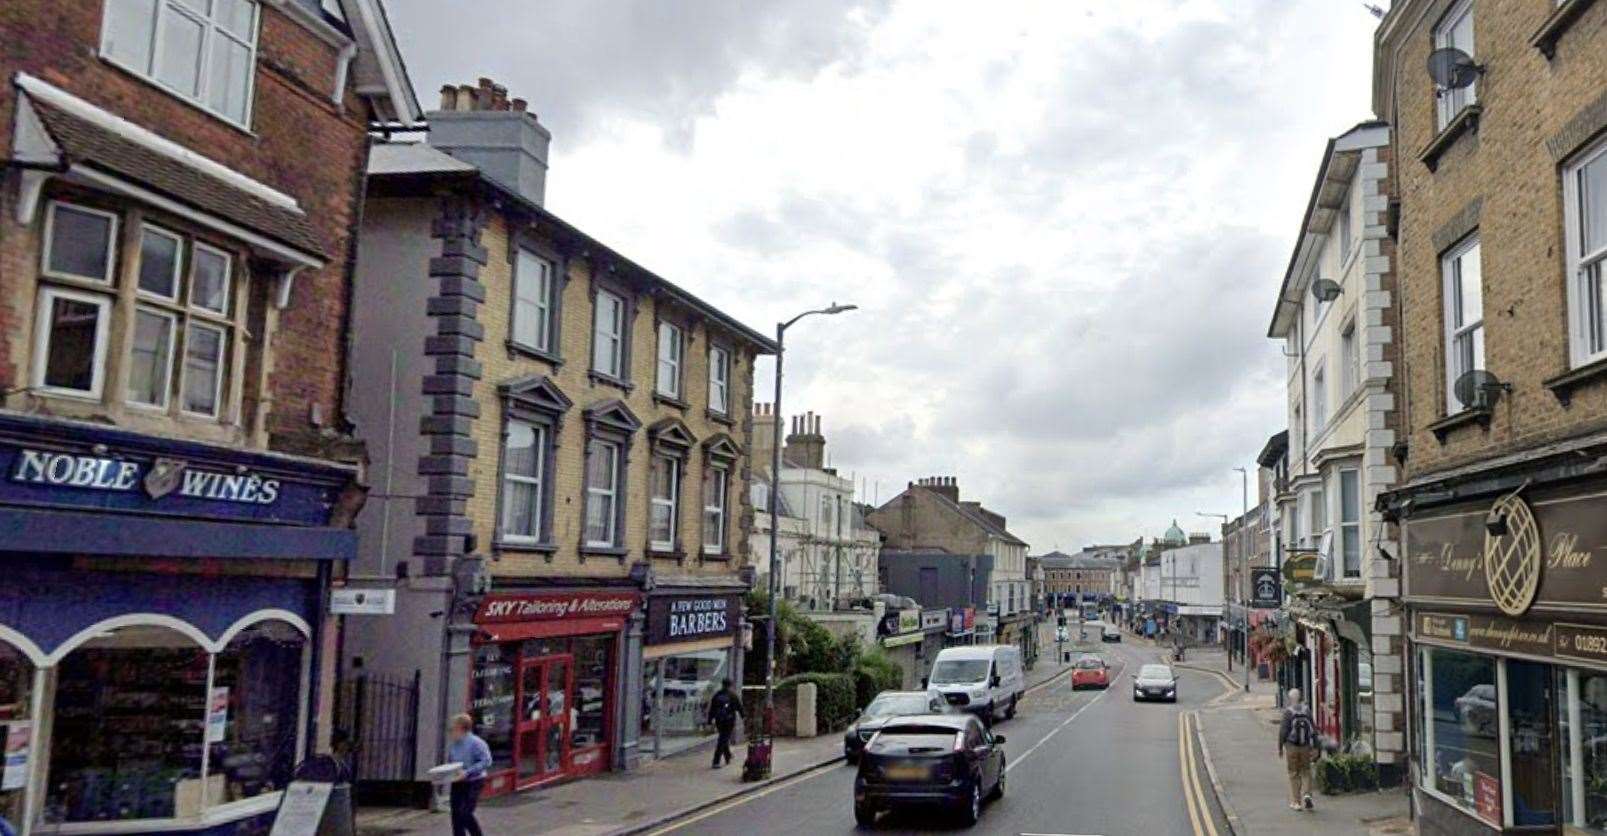 The alleged assault took place in Grosvenor Road, Tunbridge Wells